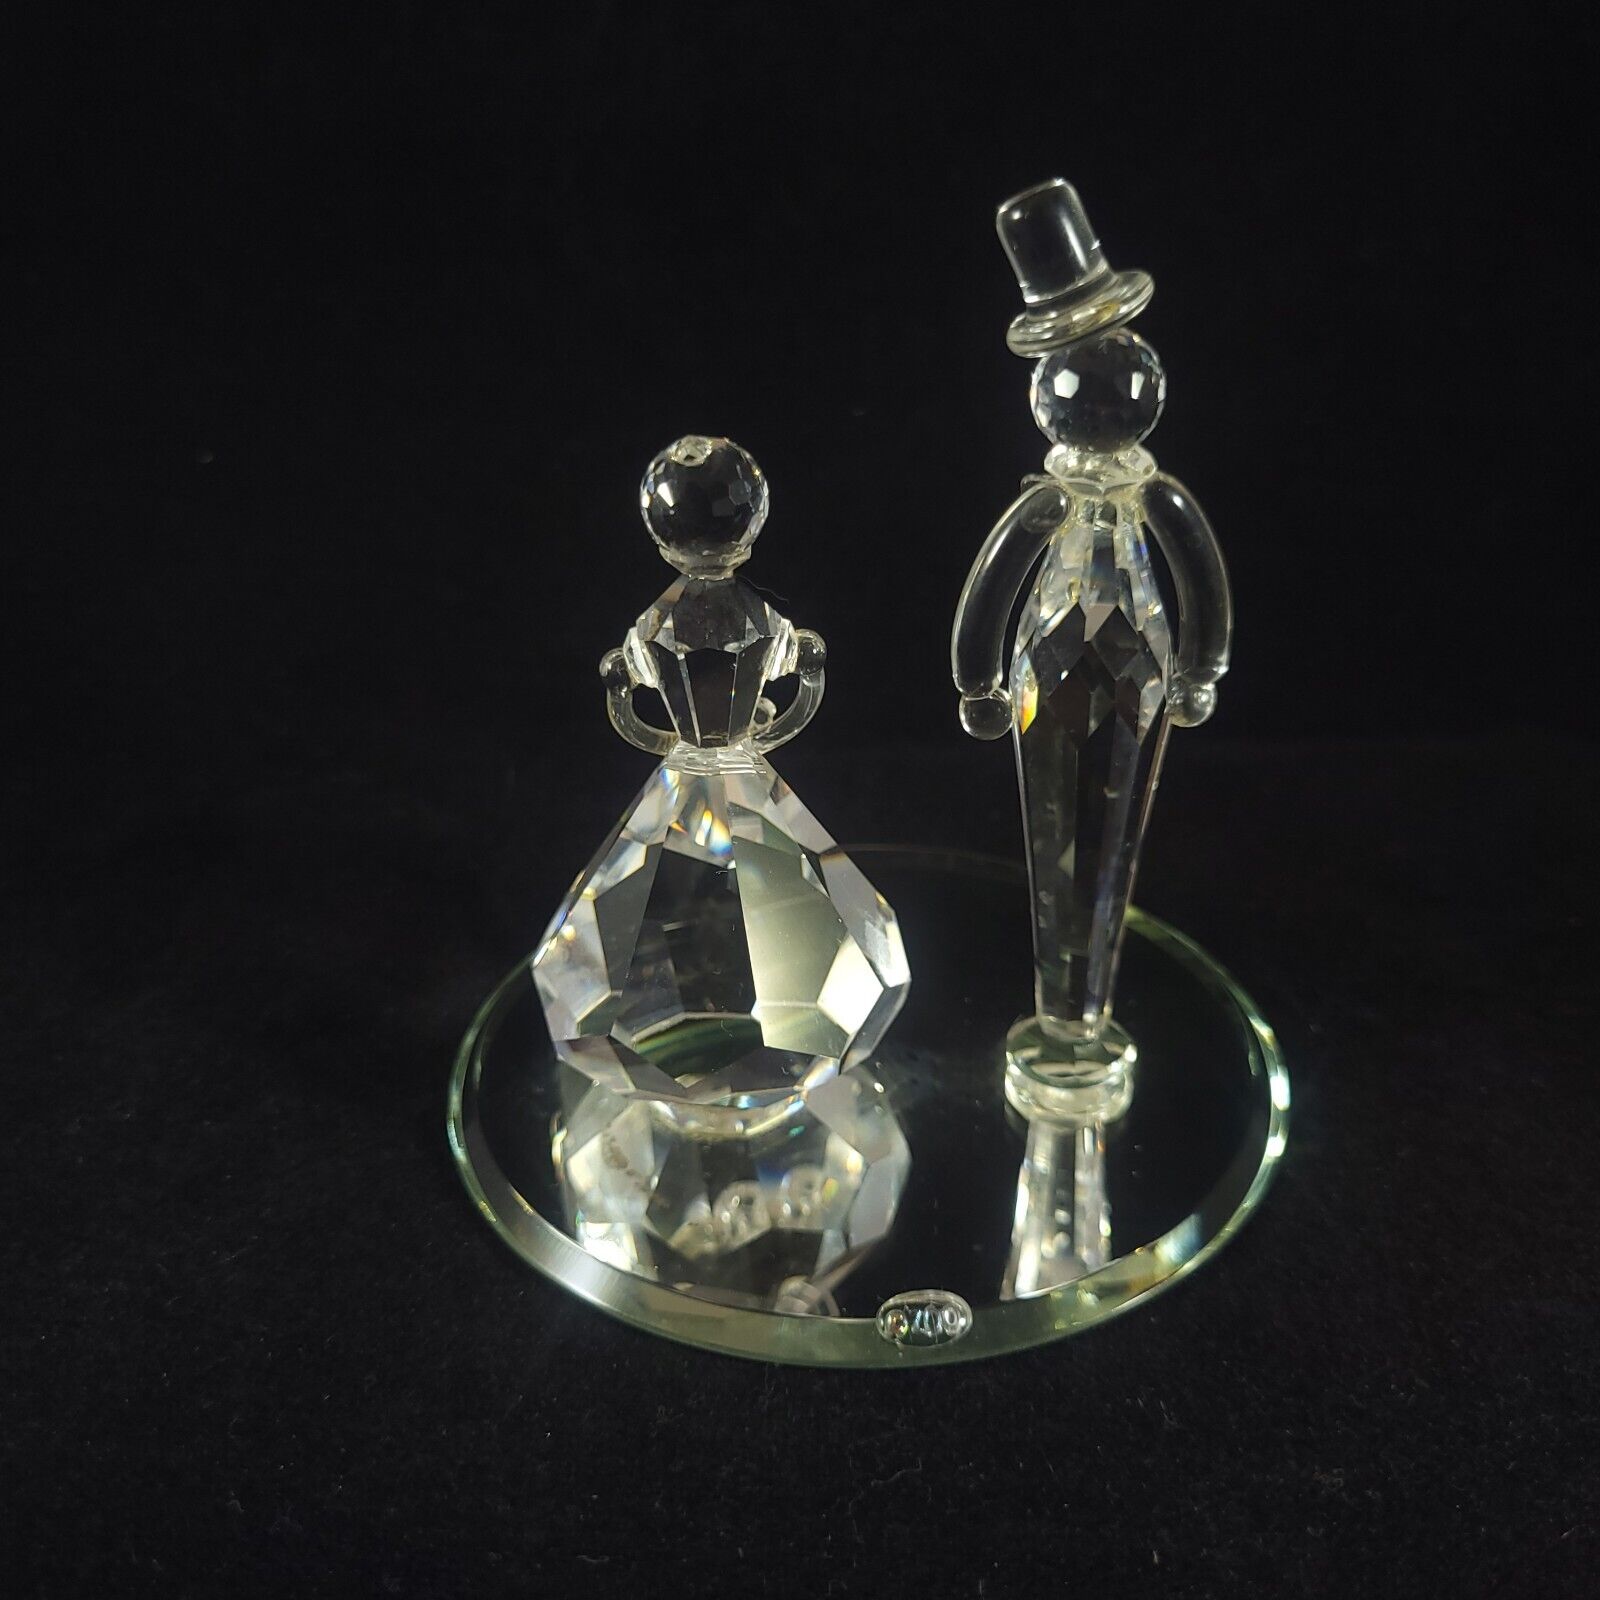 Swarovski ZOO Crystal 3-inch Bride and Groom Wedding Figurine on Mirror Base 